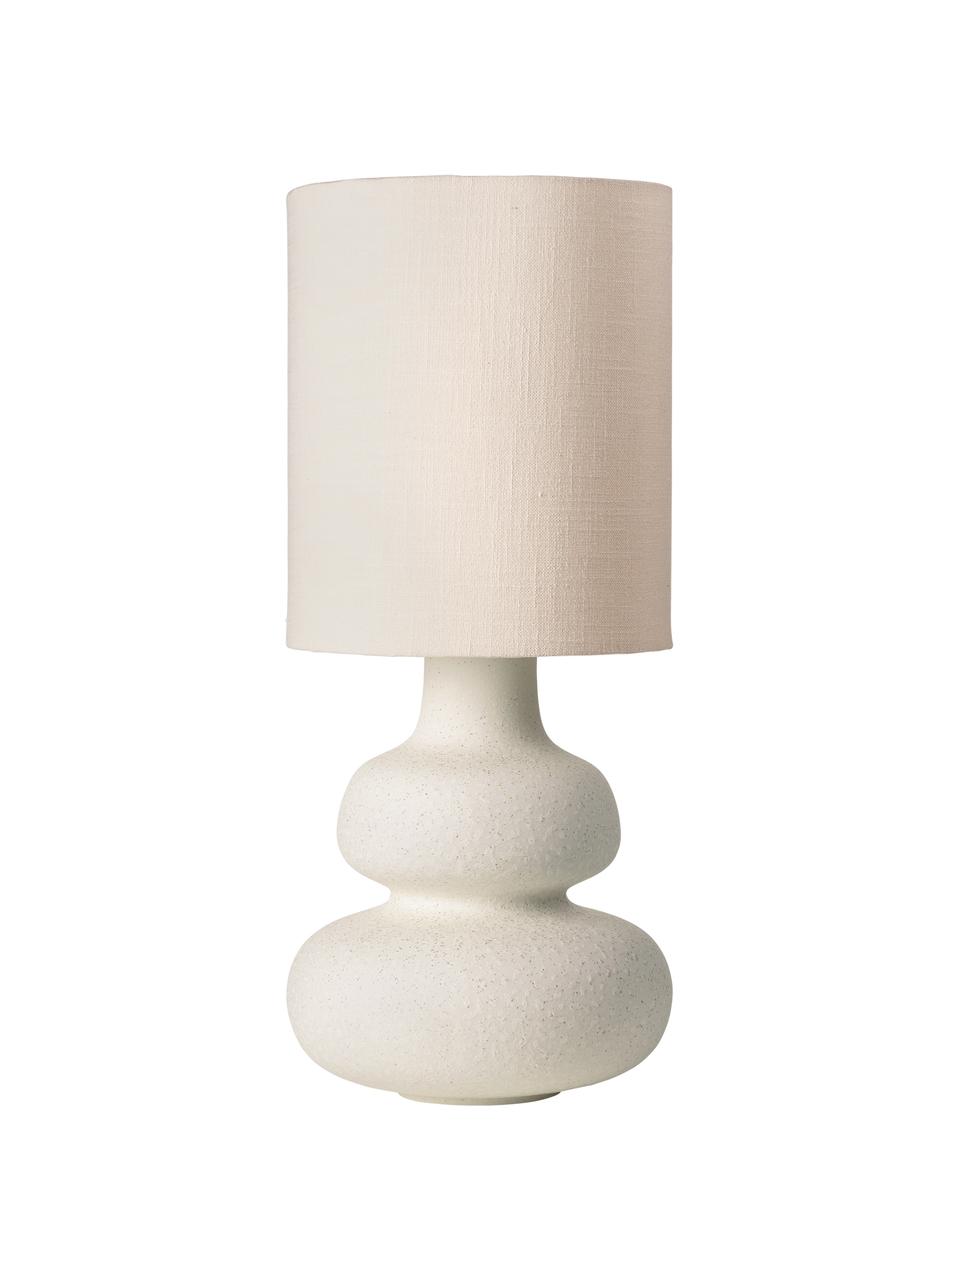 Große Tischlampe Dandie aus Keramik, Lampenschirm: Stoff, Lampenfuß: Keramik, Beige, Ø 26 x H 60 cm